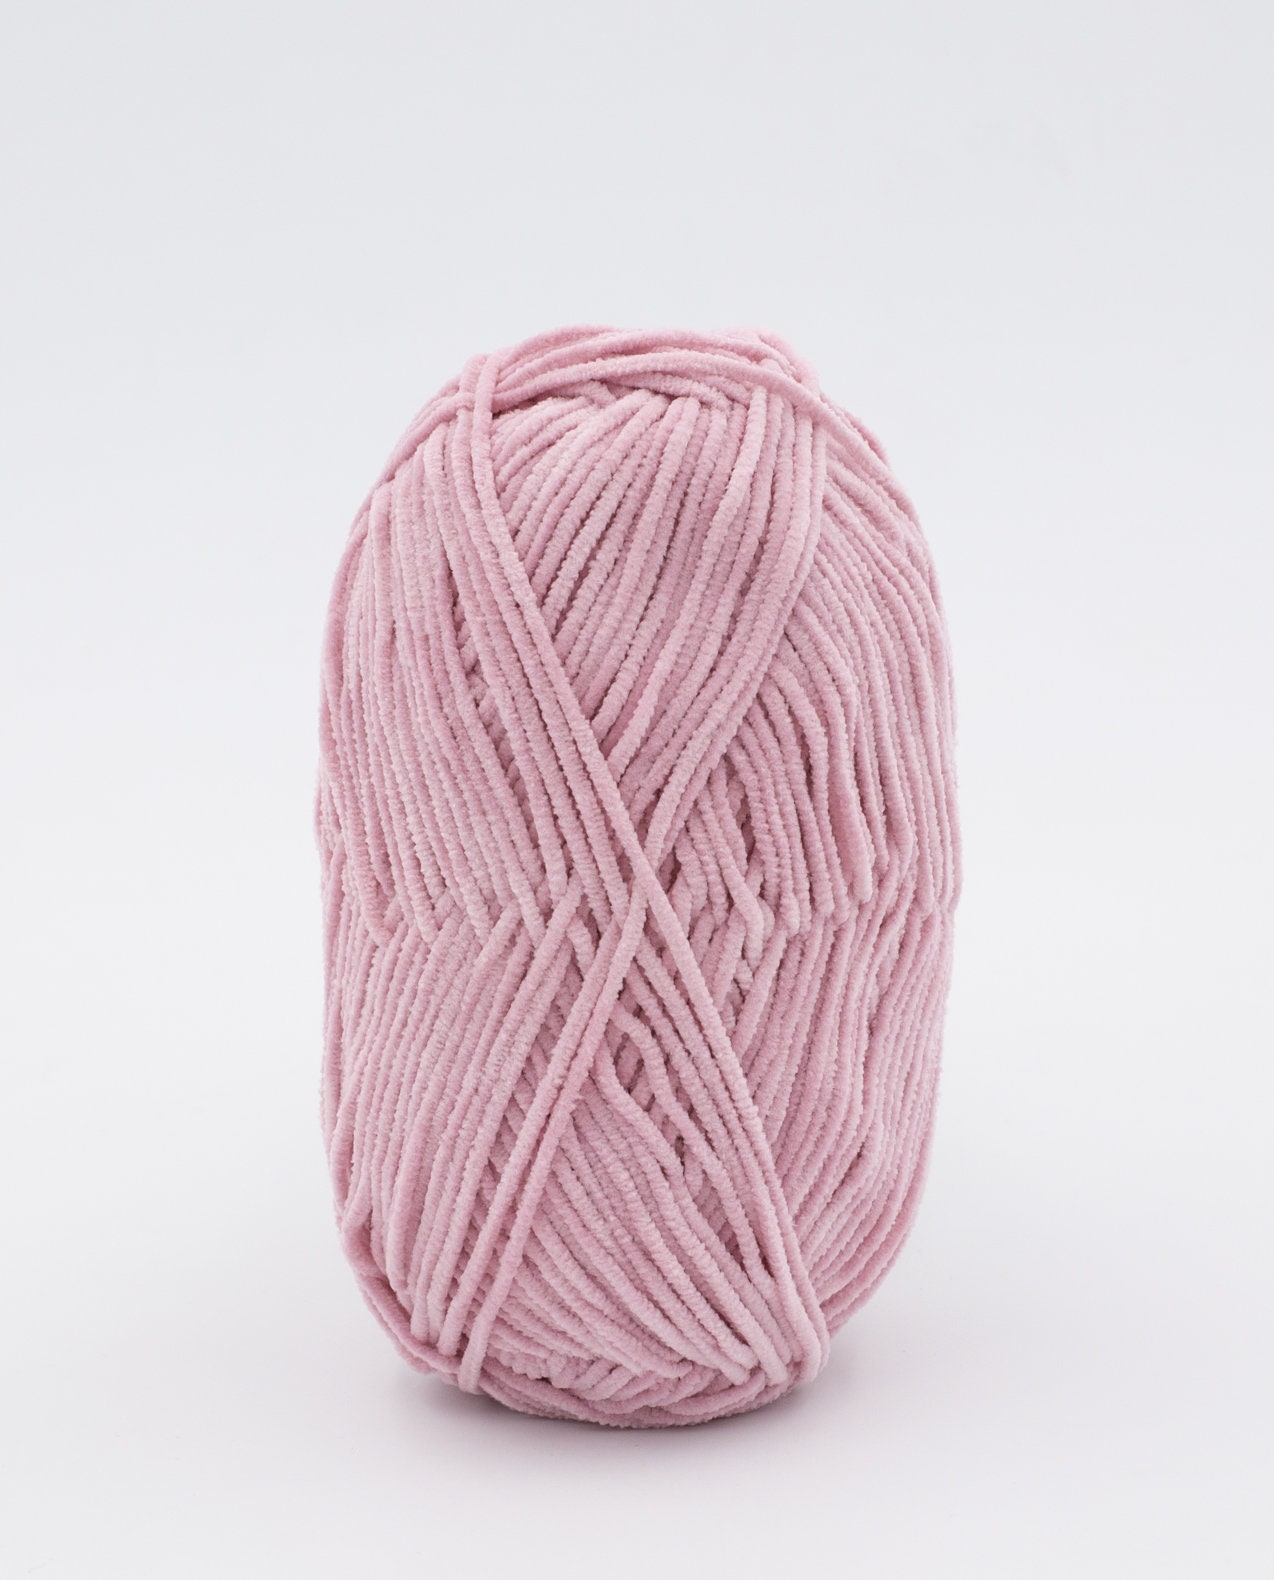 Drops Flora Wool and Alpaca Yarn Fingering Weight Yarn for Knitting Yarn  for Socks Sock Yarn Crochet Yarn 